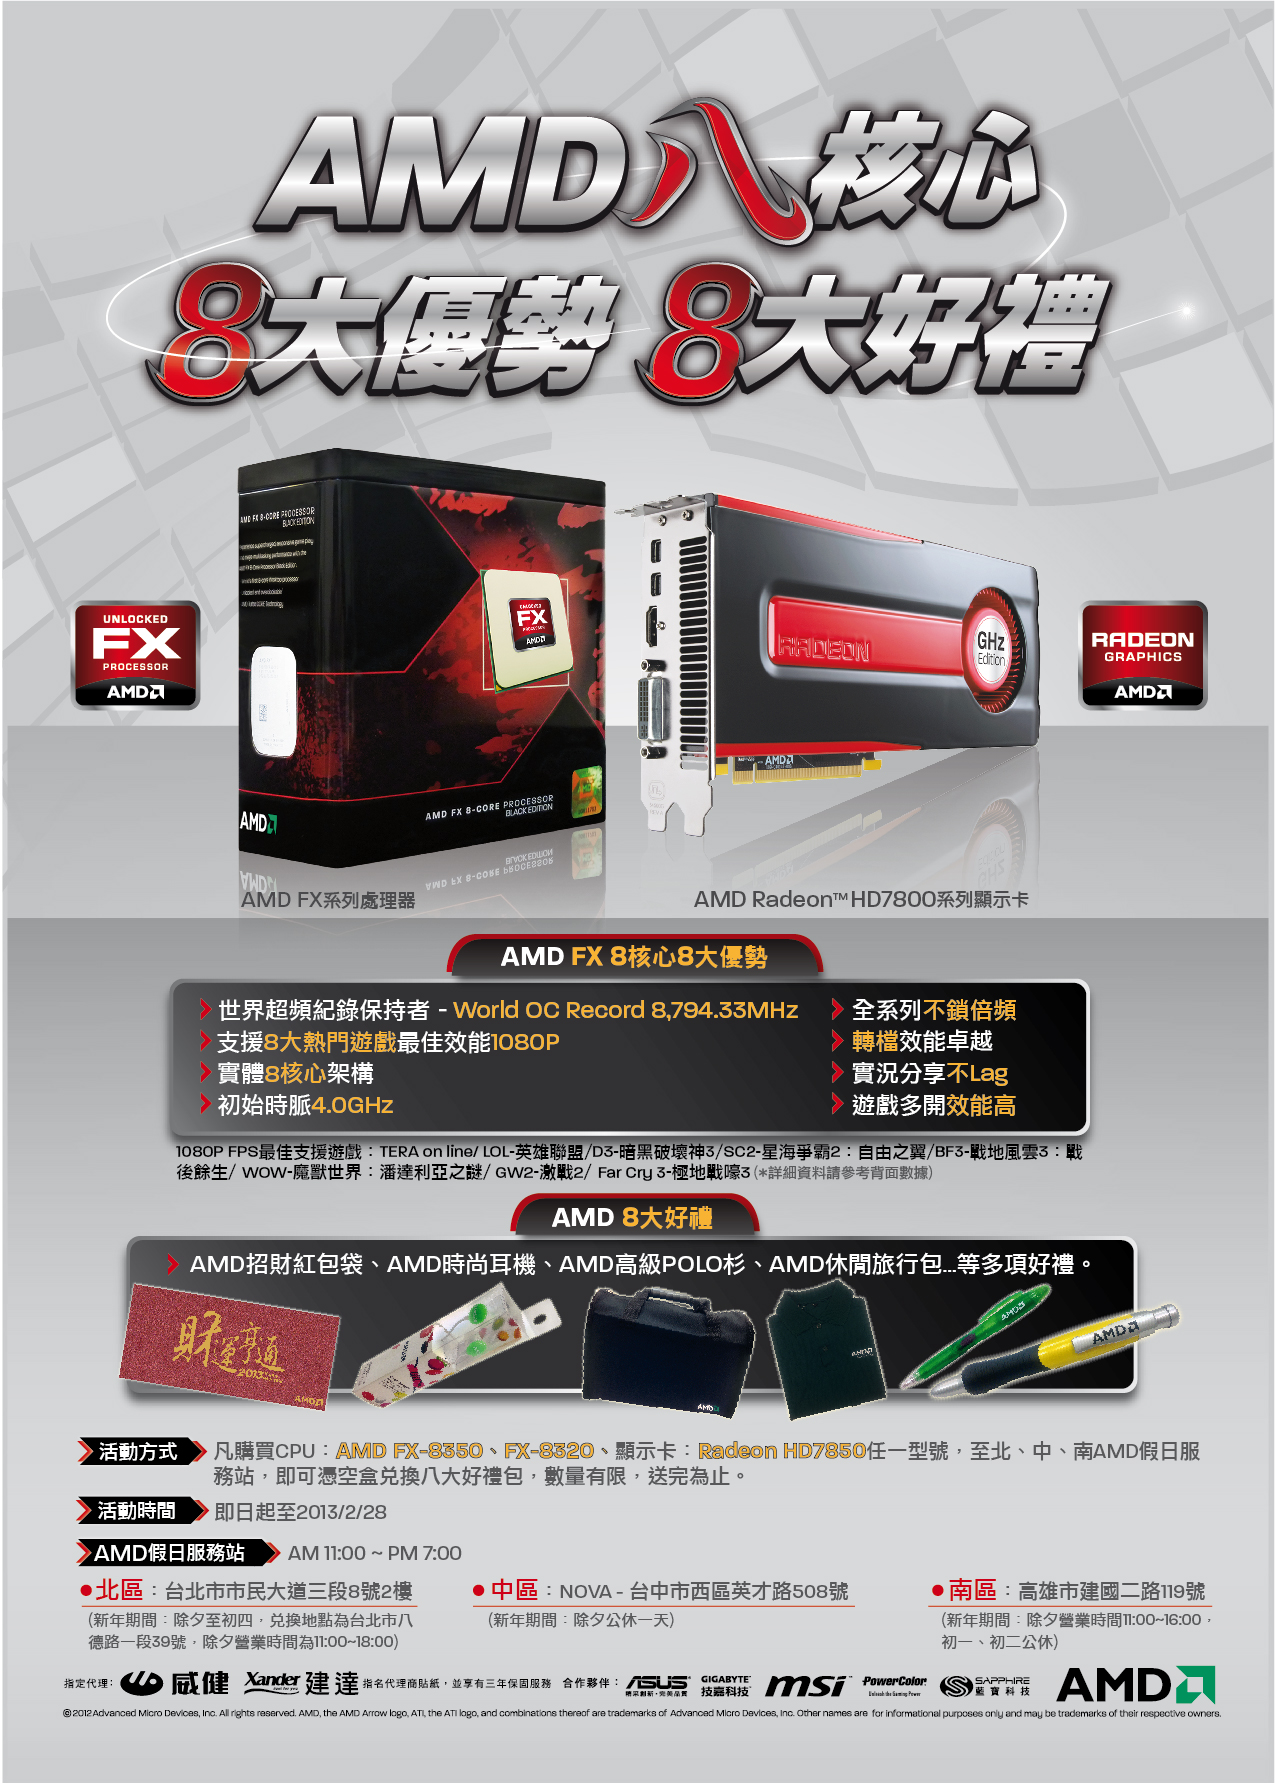 1Q13-AMD-kk-EDM.JPG - 1.09 MB